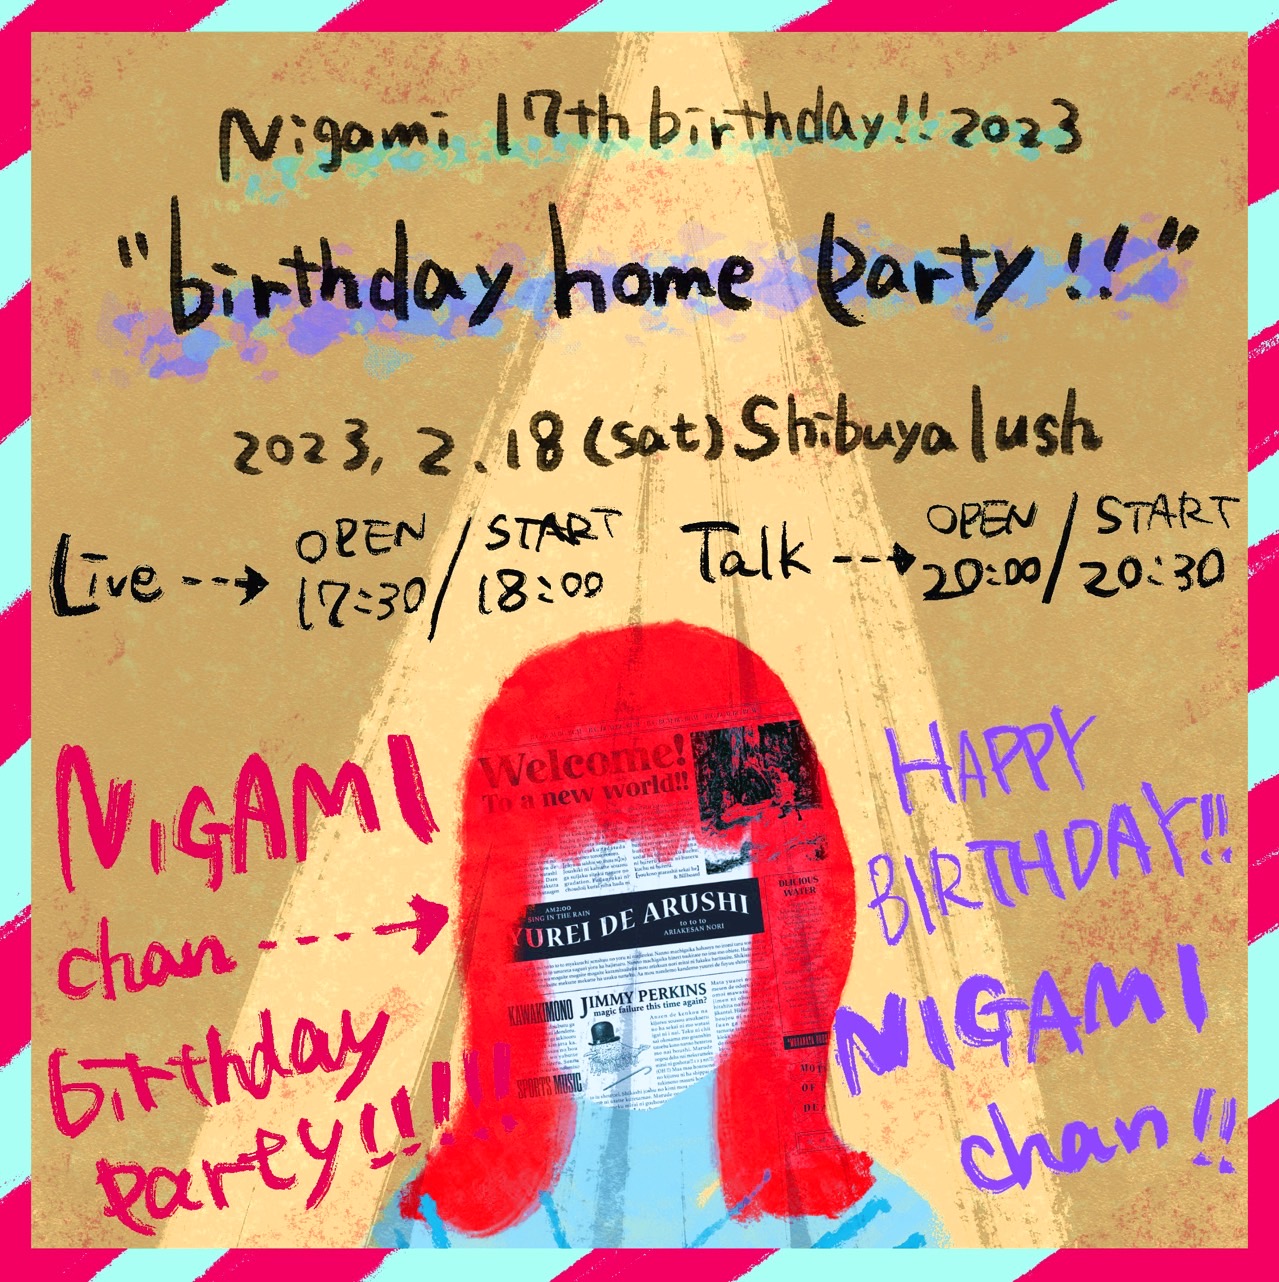 nigami 17th birthday!! “birthday home party!!”